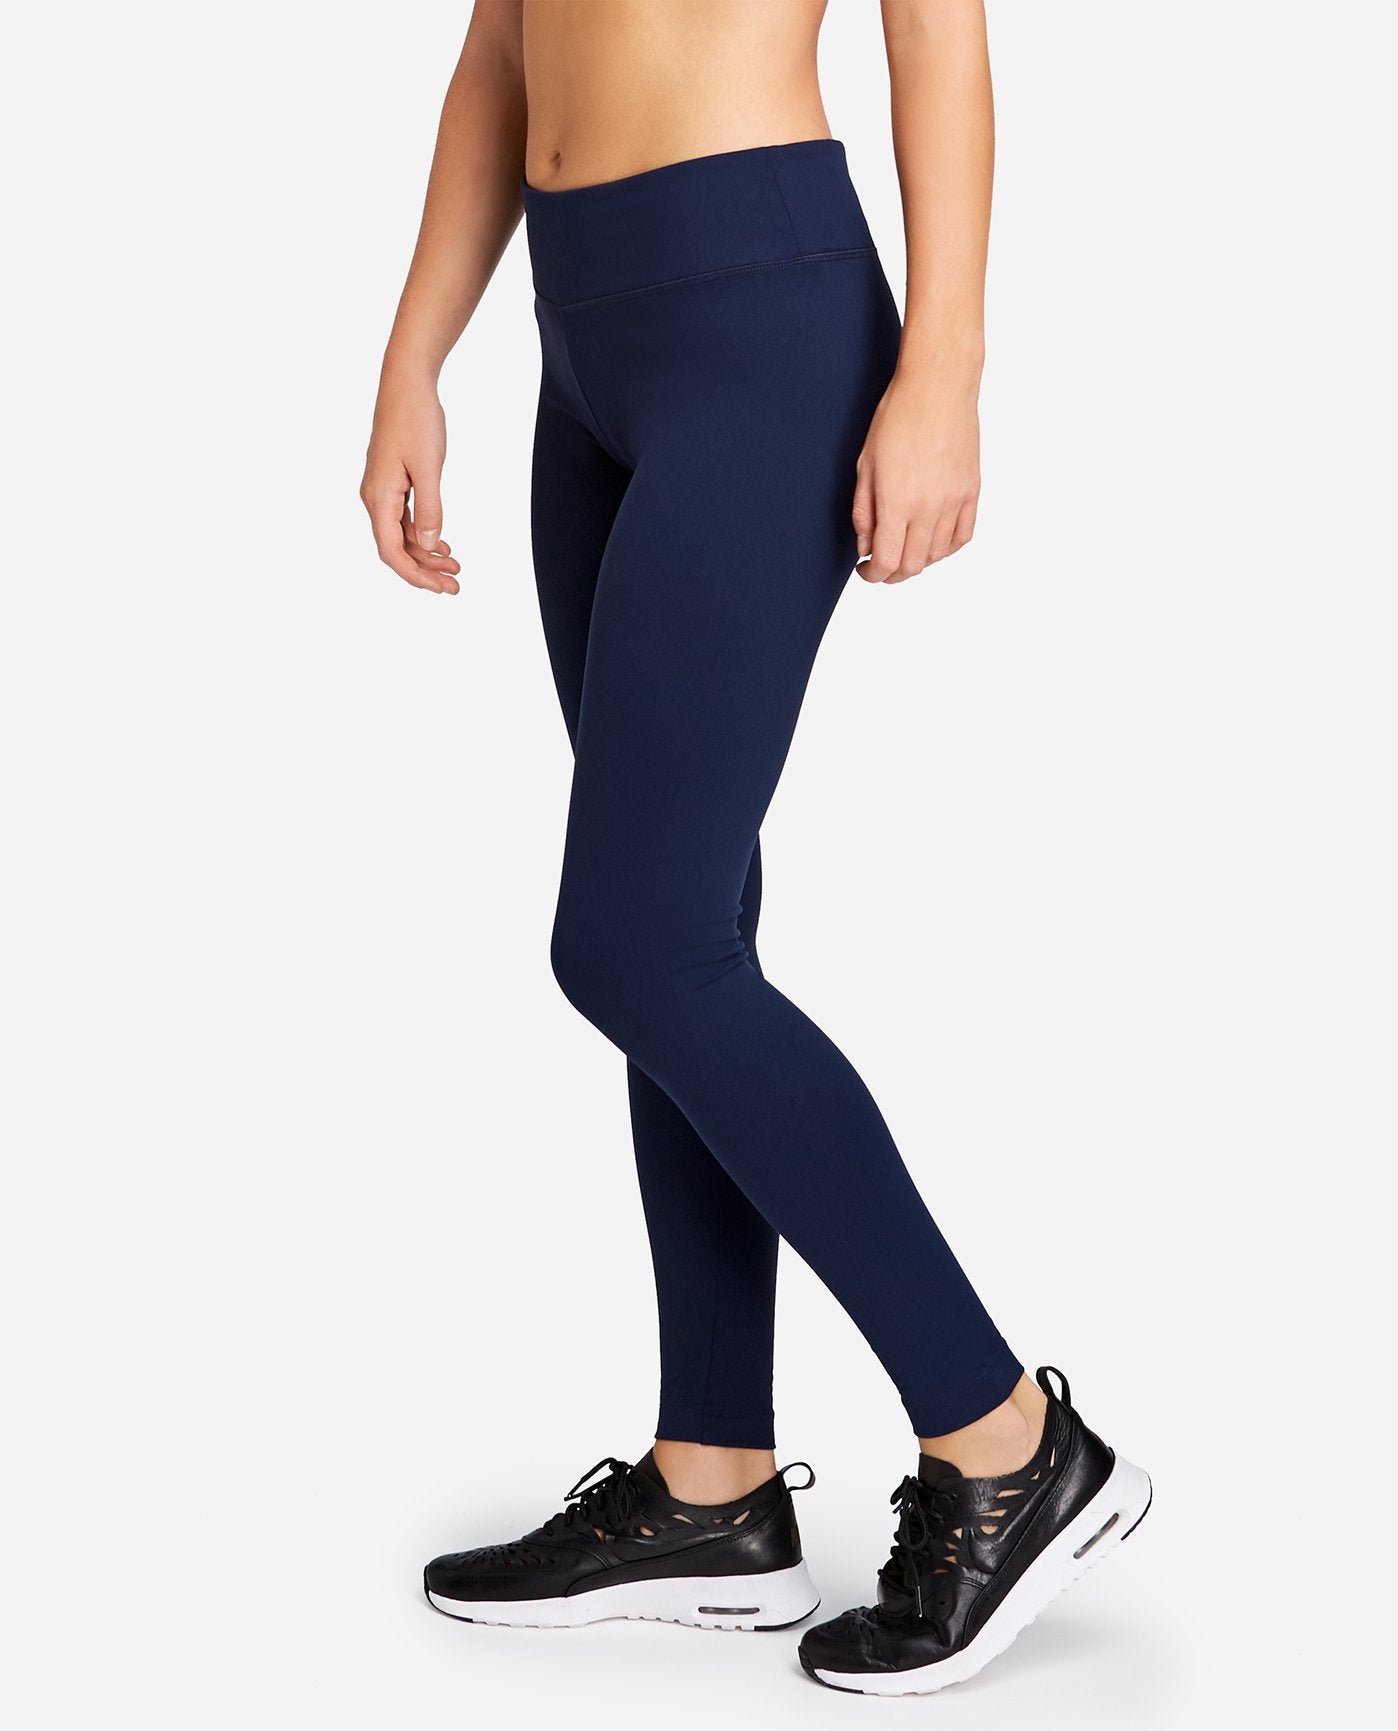 Danskin Now, Pants & Jumpsuits, Spandex Danskin Now Yoga Pants Calf  Length